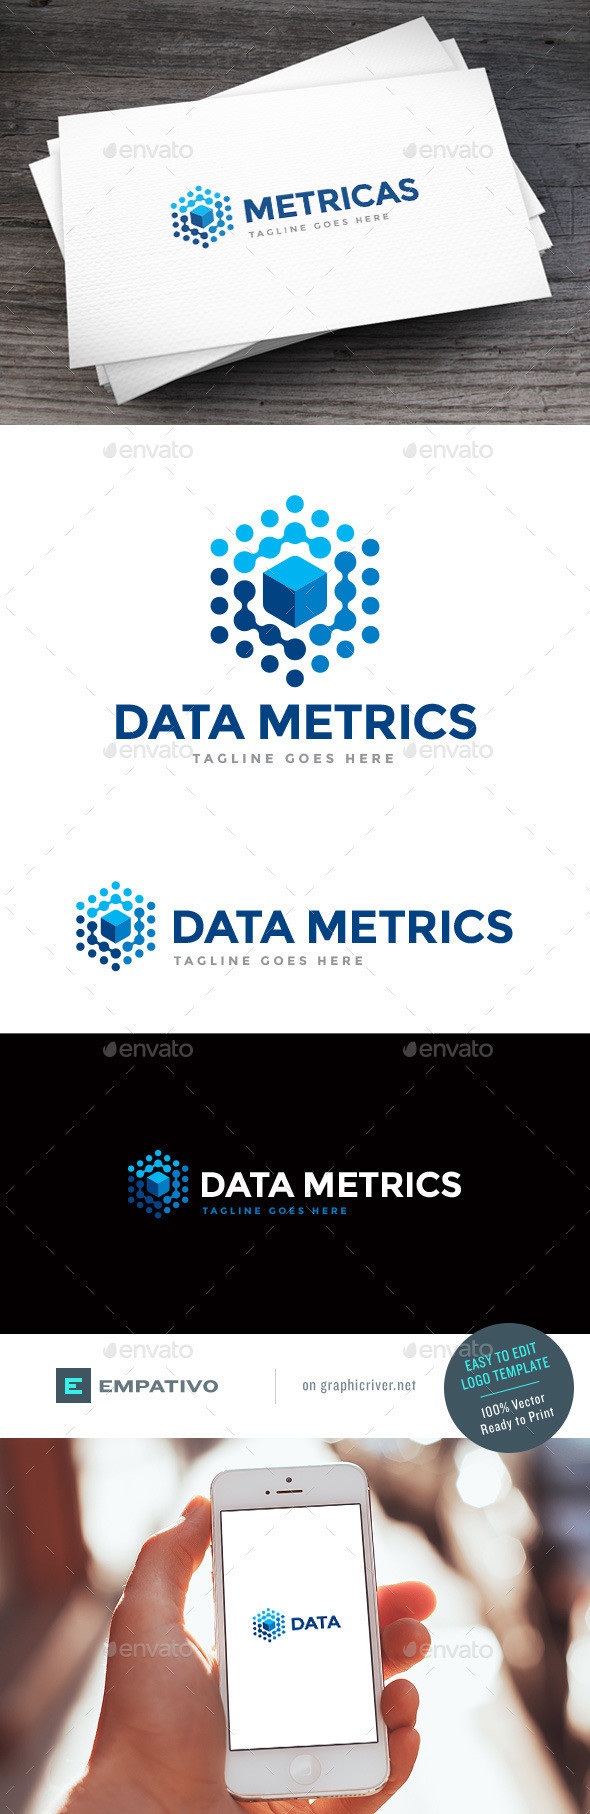 Data metrics logo template